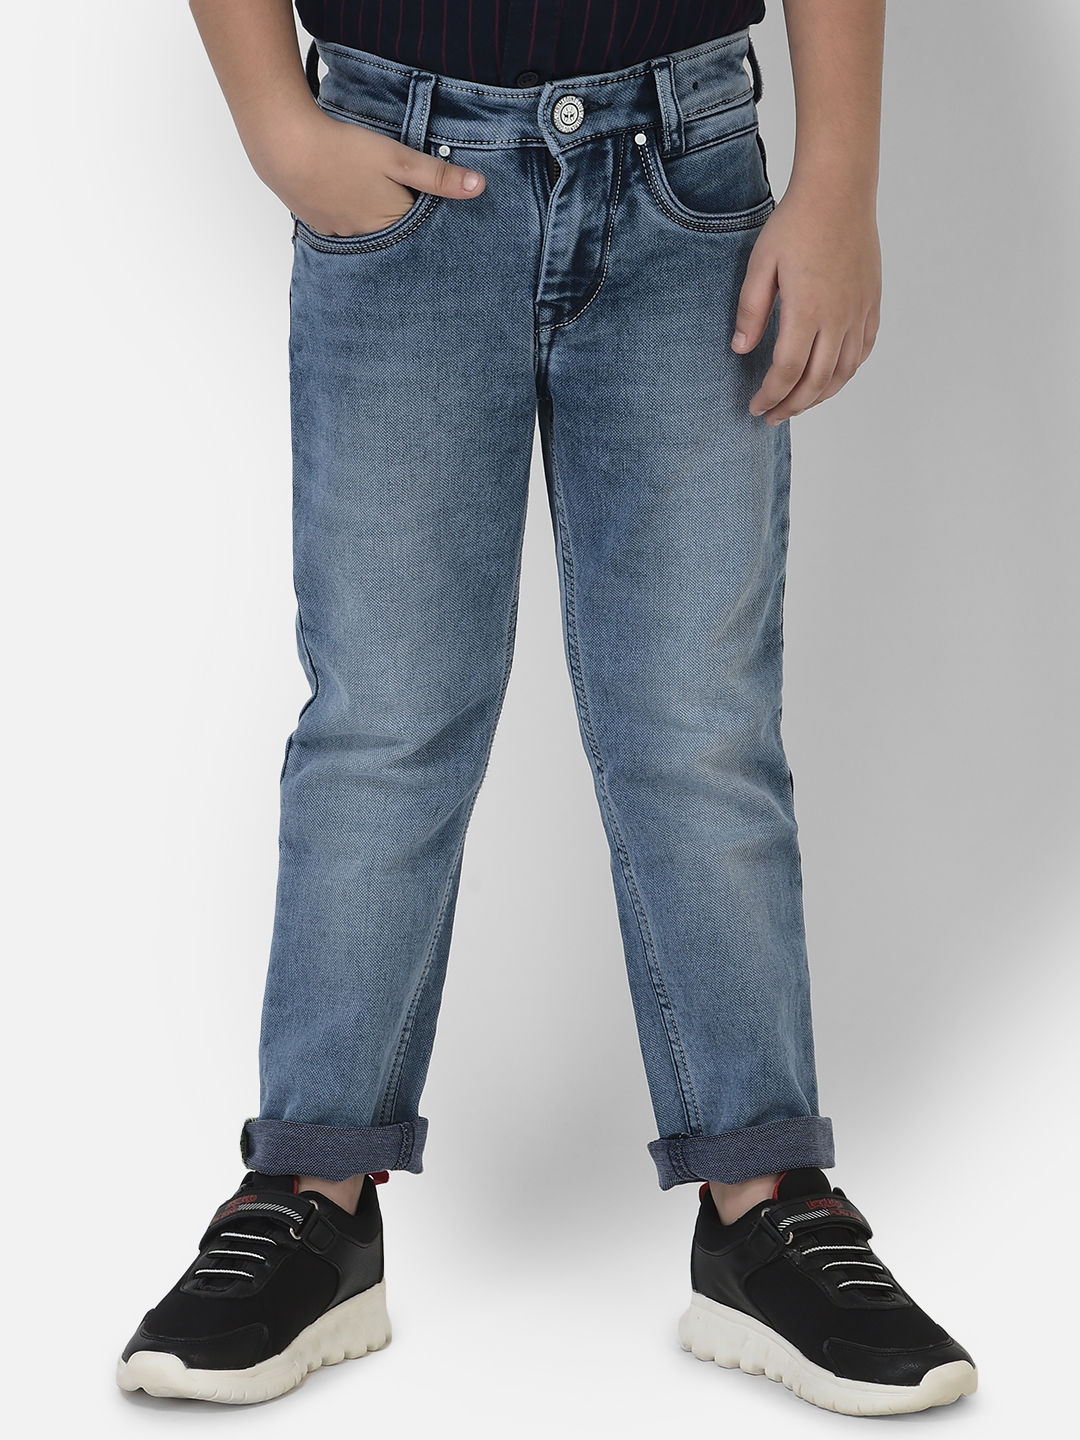 Crimsoune Club Boy Blue Jeans in Light Wash Detail 